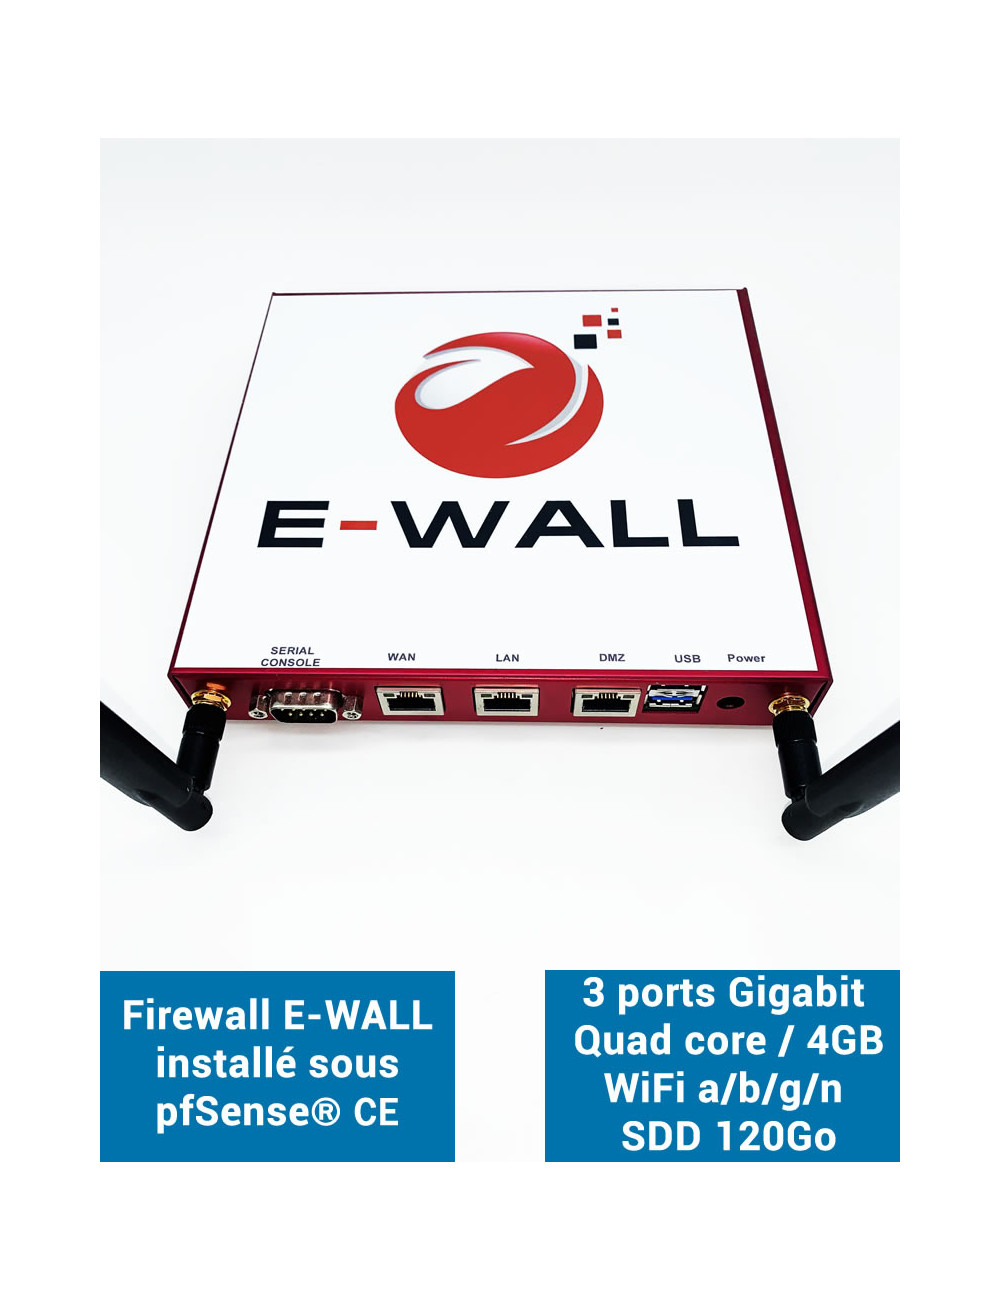 Firewall Appliance AP234 bajo pfSense® CE 3 puertos WIFI 4GB SSD 120GB